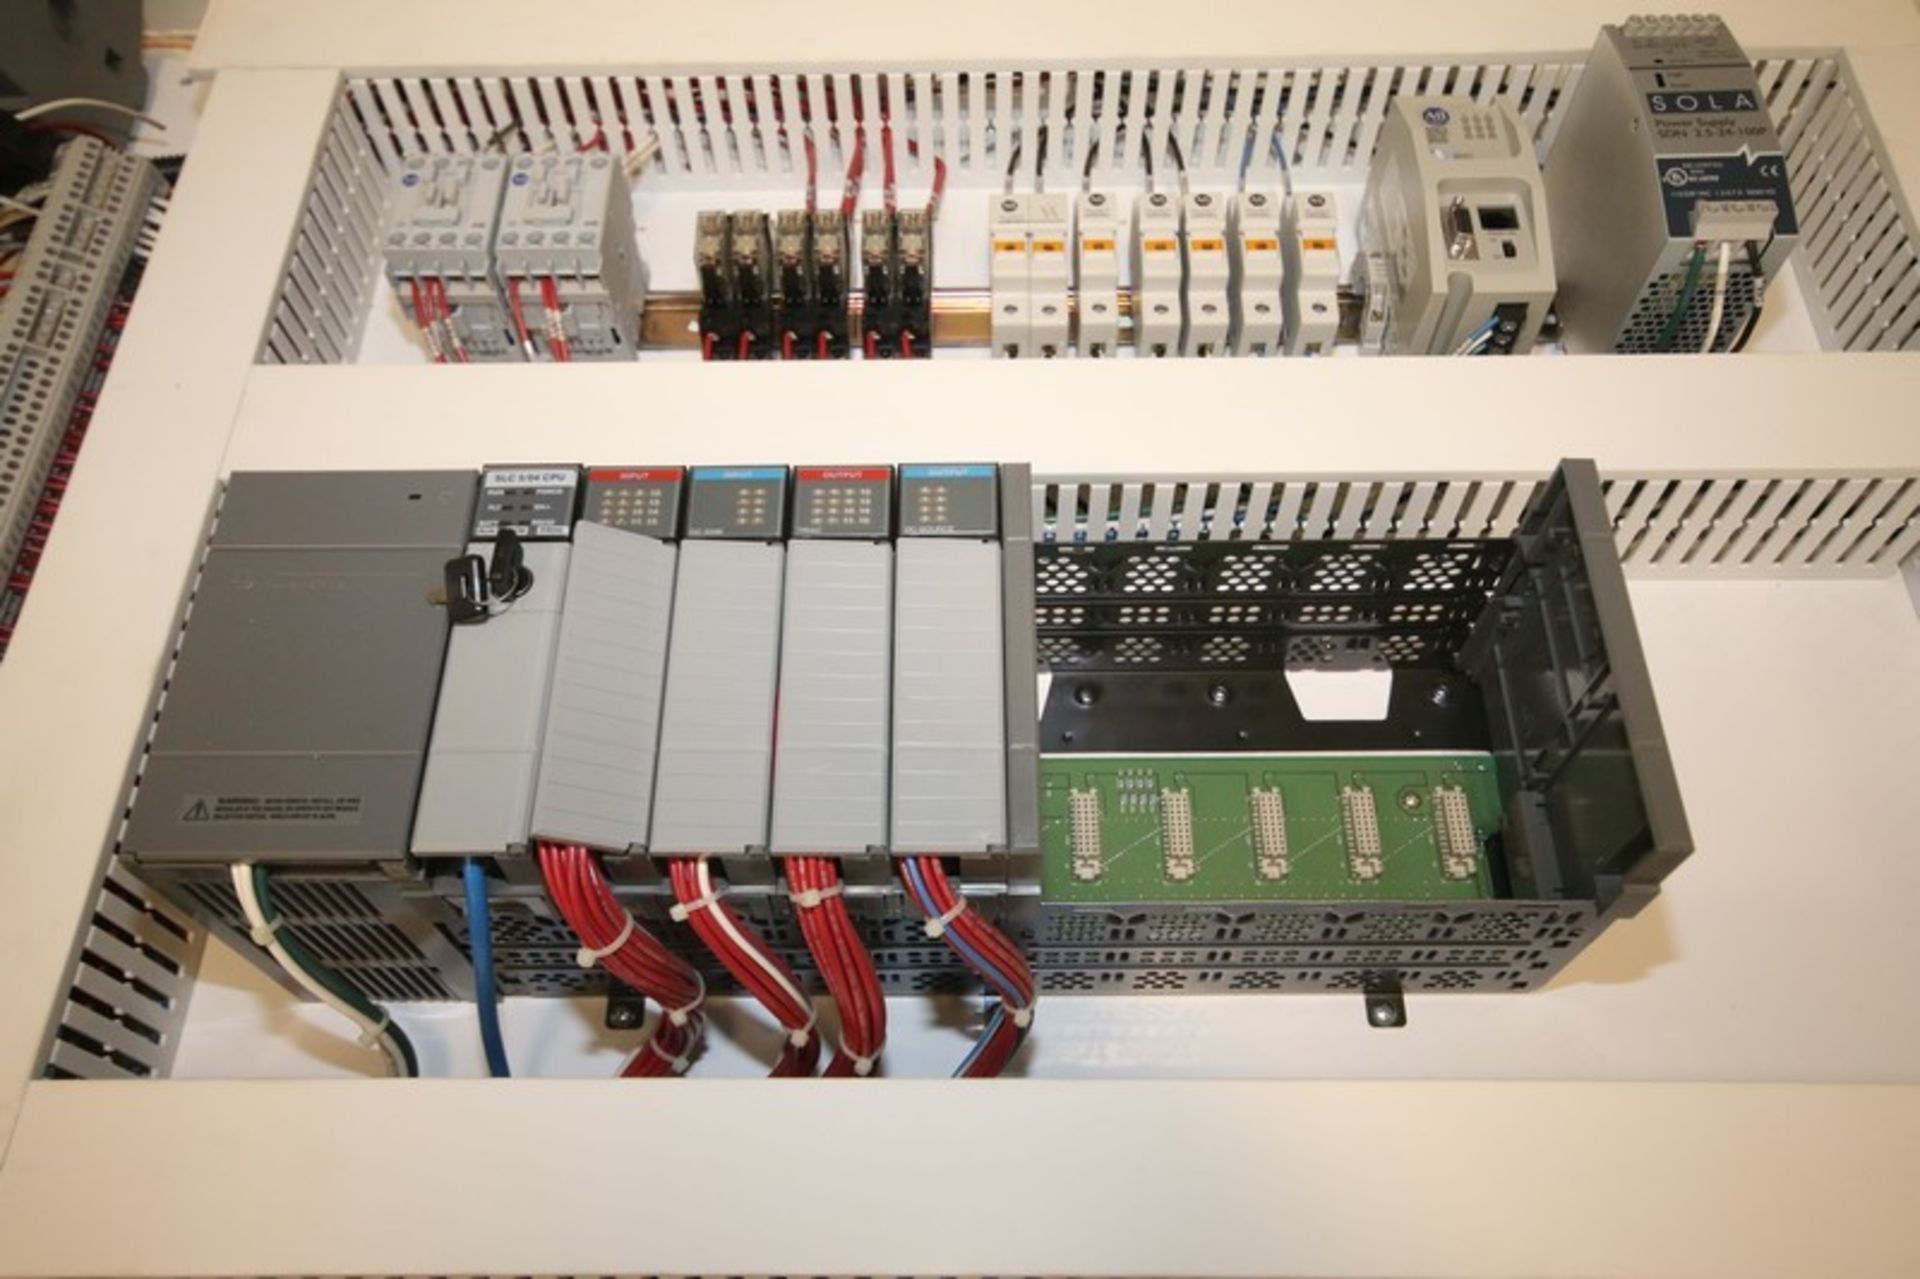 Hoffman/BMI 4' H x 4' W x 12" D 2-Door Production Control Panel with Allen Bradley SLC 5-04 PLC - Image 3 of 3